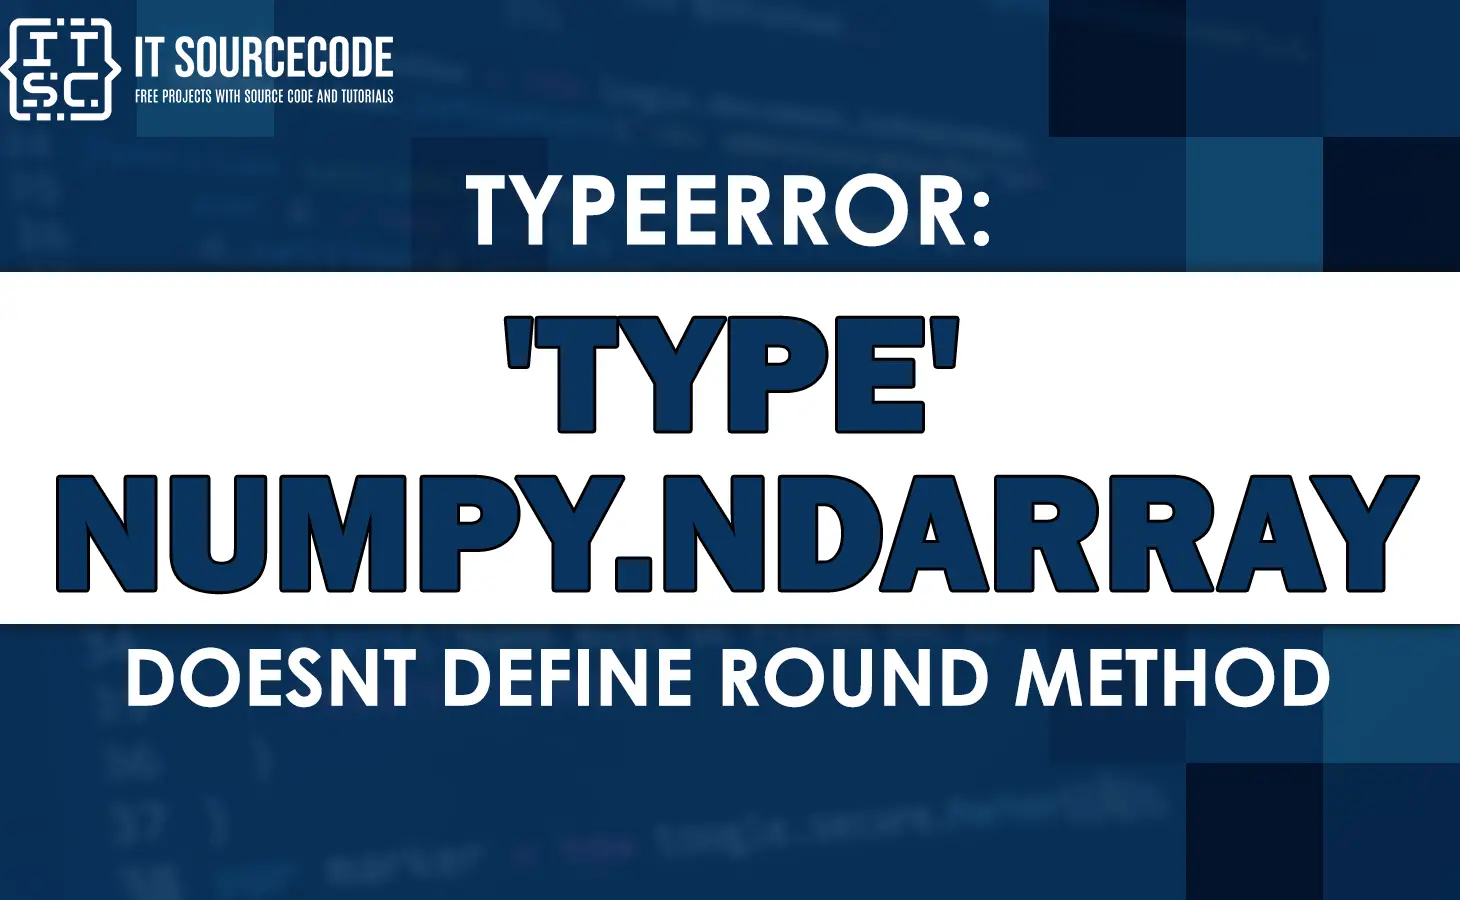 Typeerror type numpy.ndarray doesnt define round method